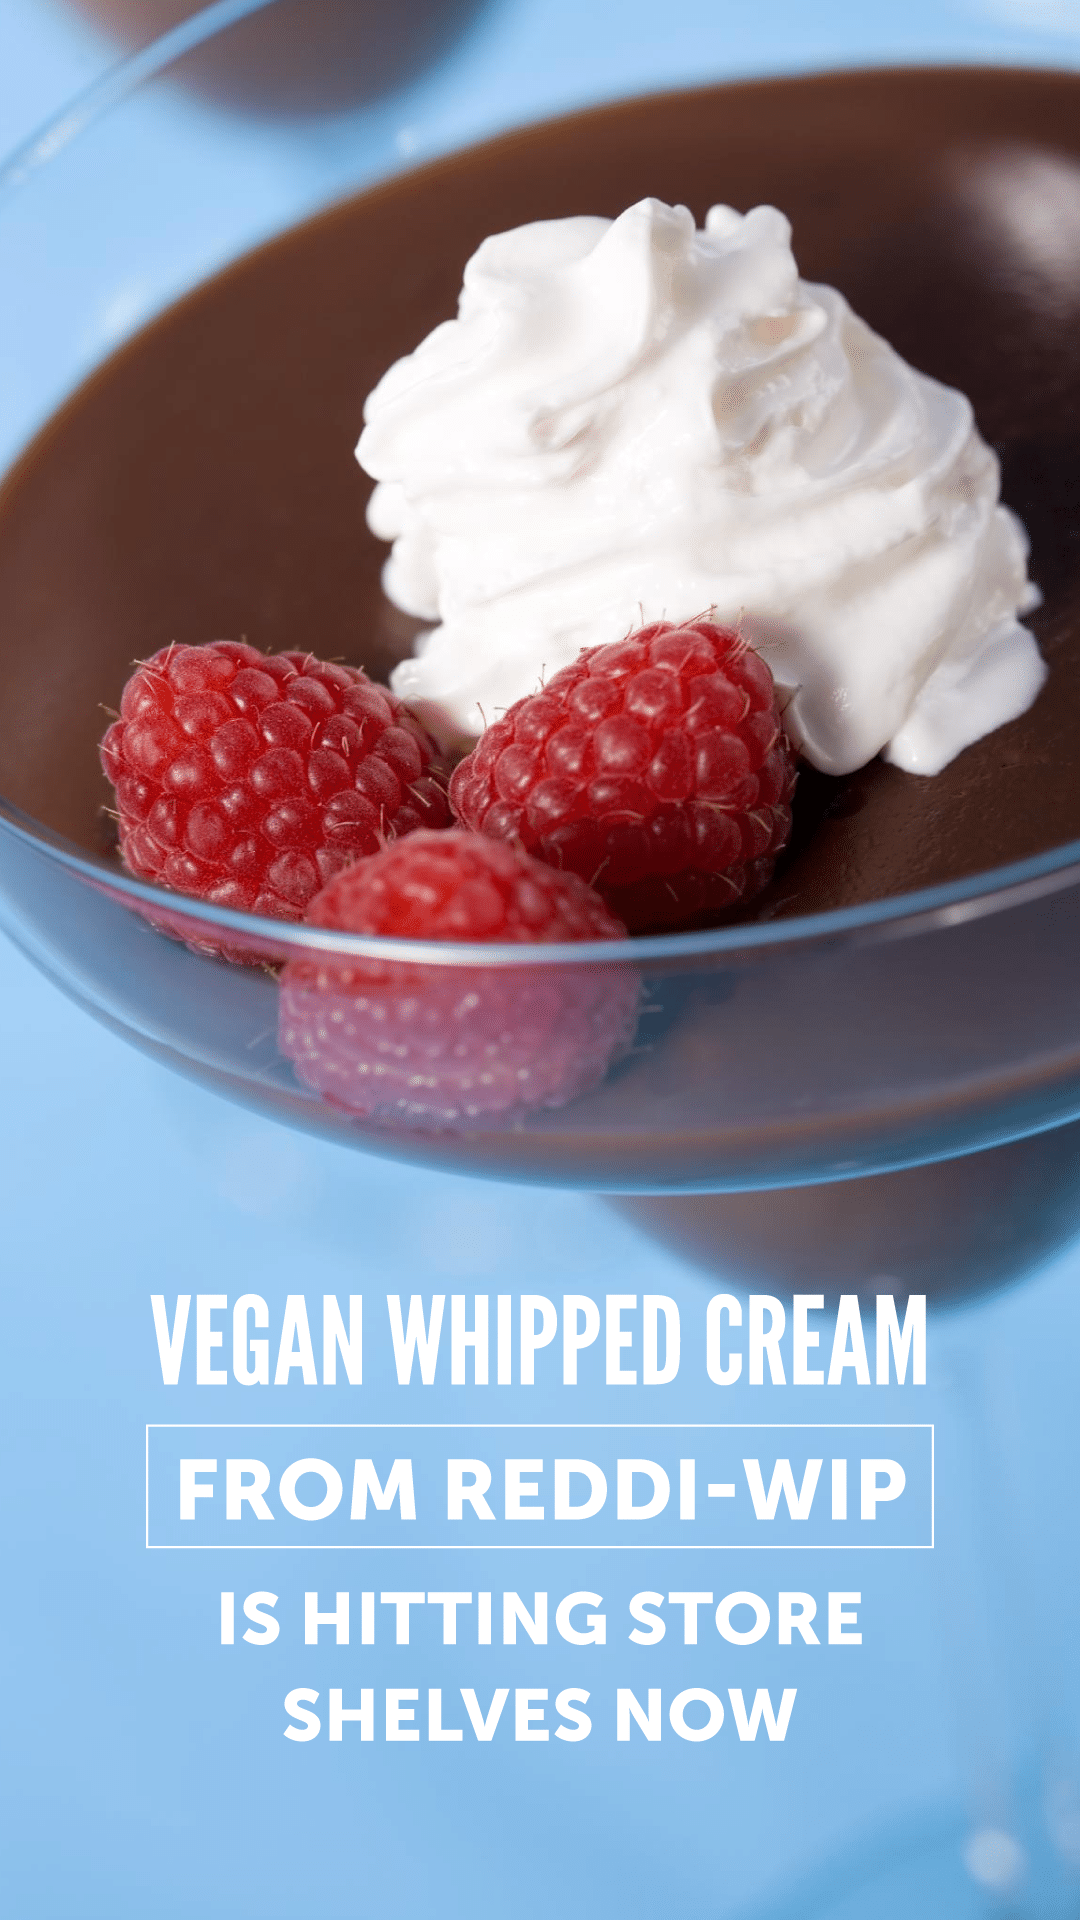 Vegan Whipped Cream From Reddi-wip Is Hitting Store Shelves Now